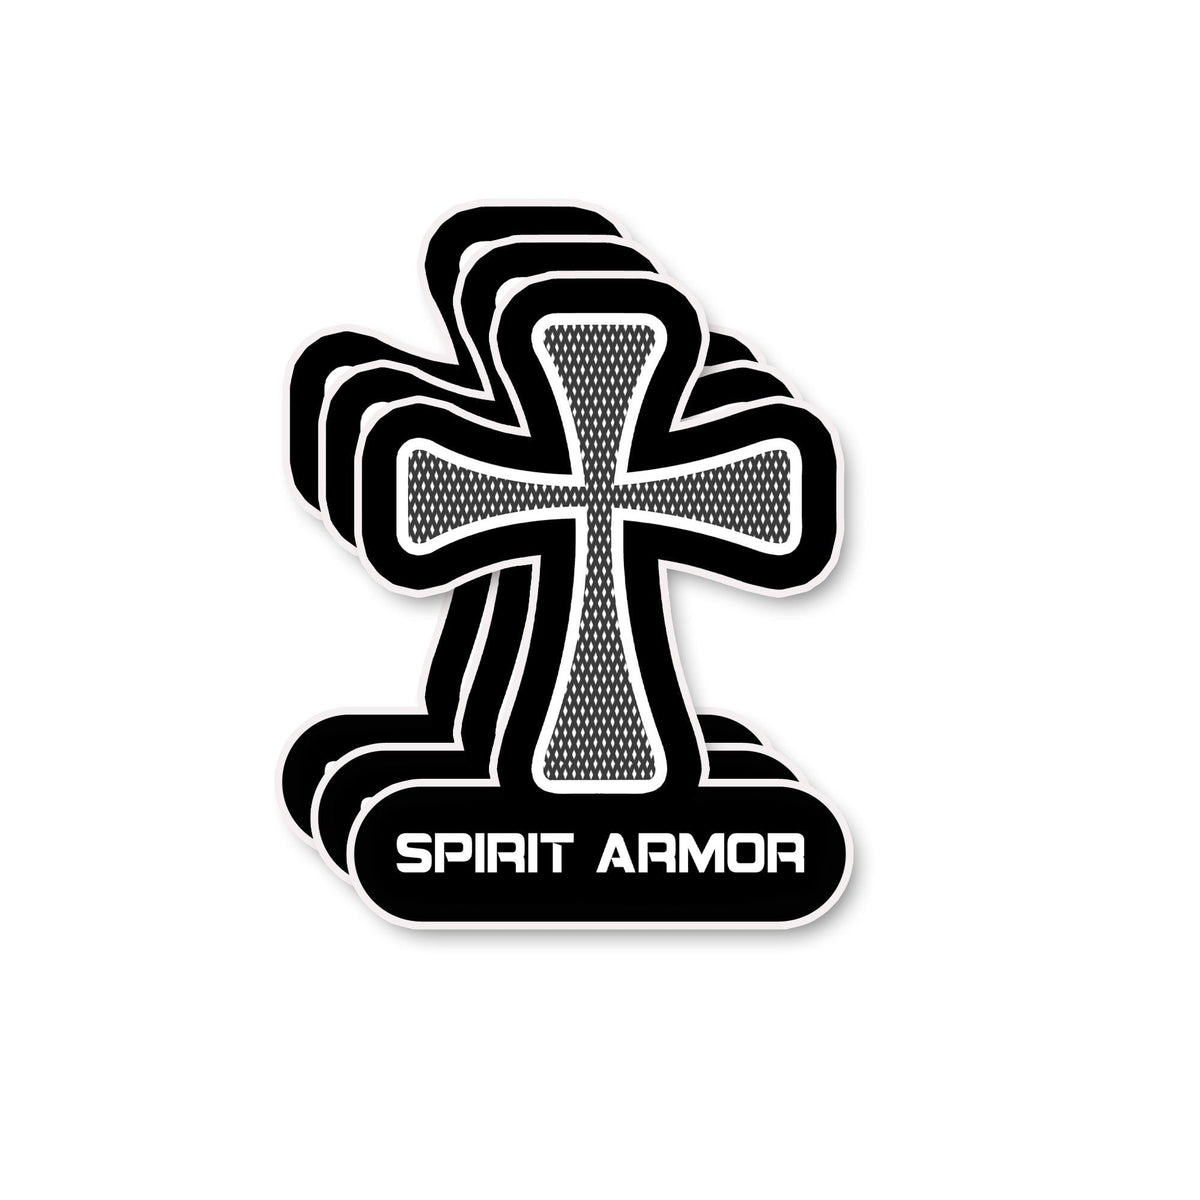 Spirit Armor Decals - Our True God